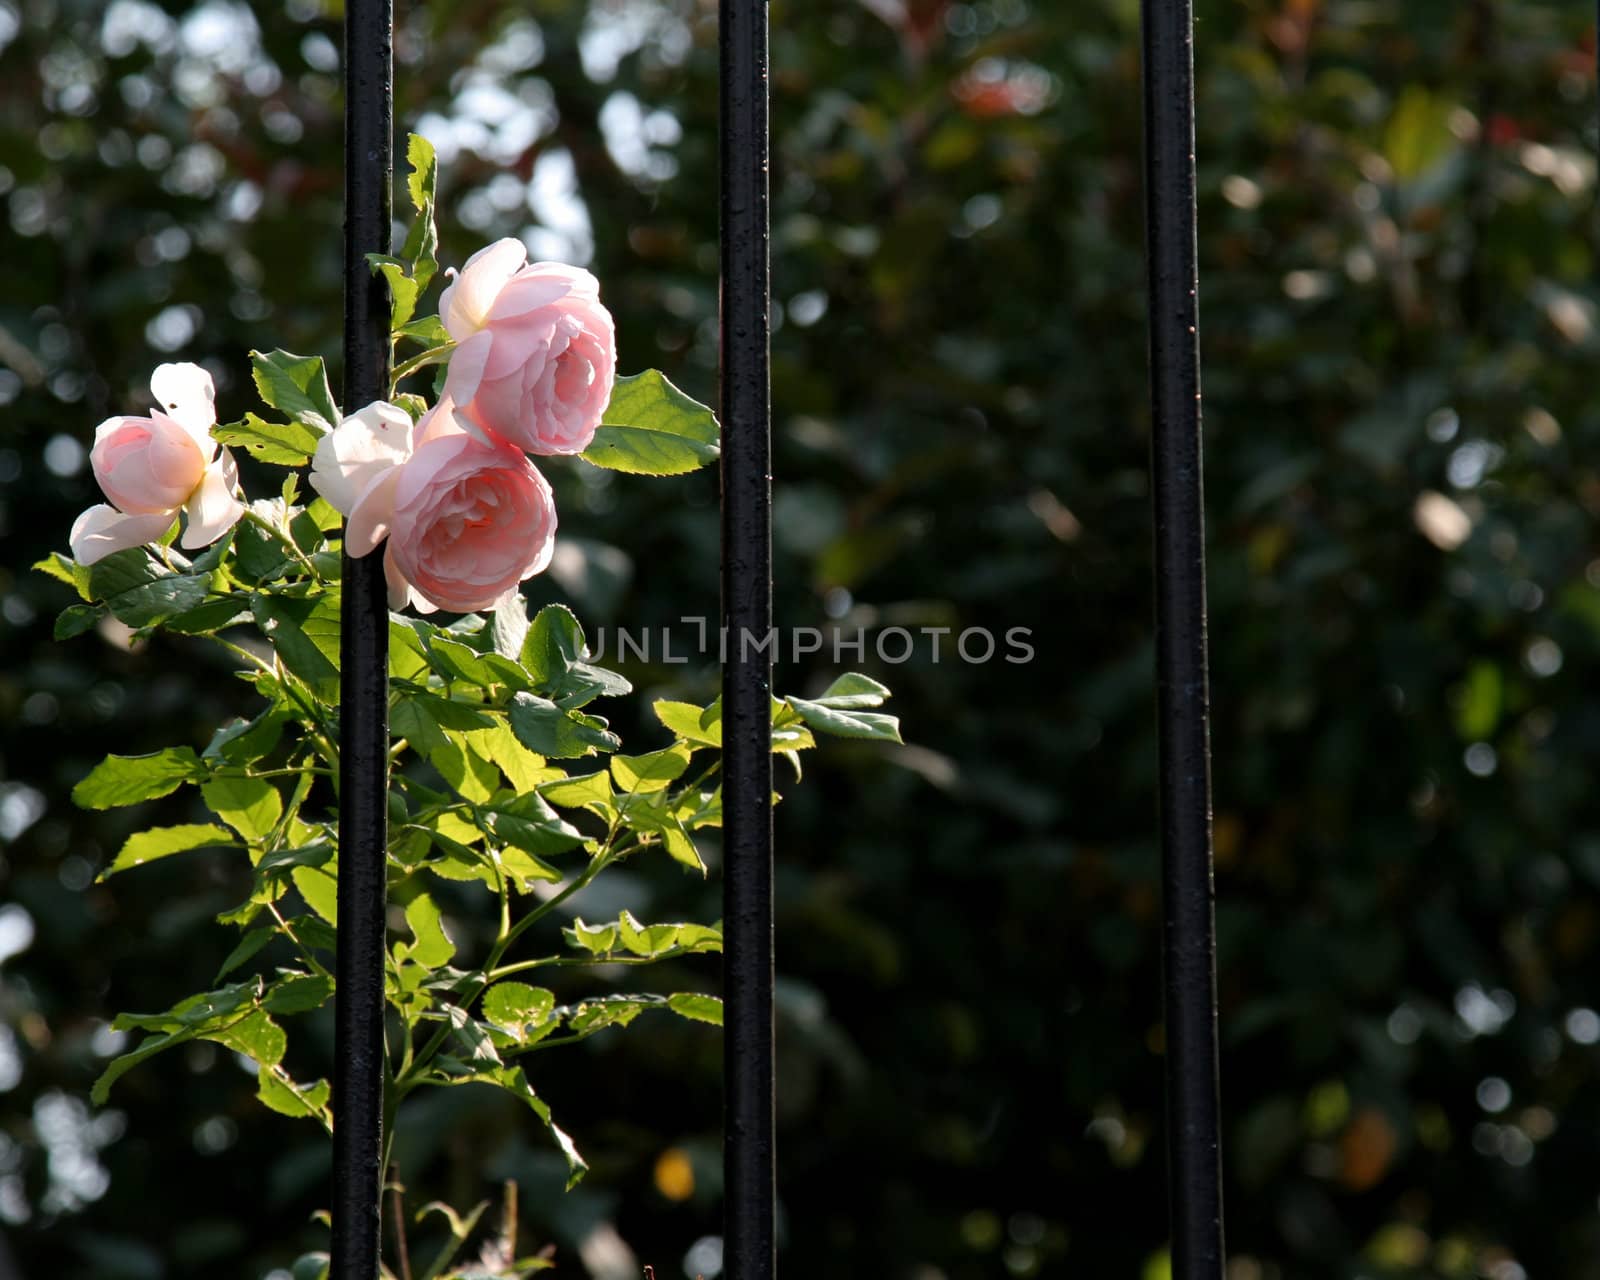 A pink rose bush peaking between black iron bars.